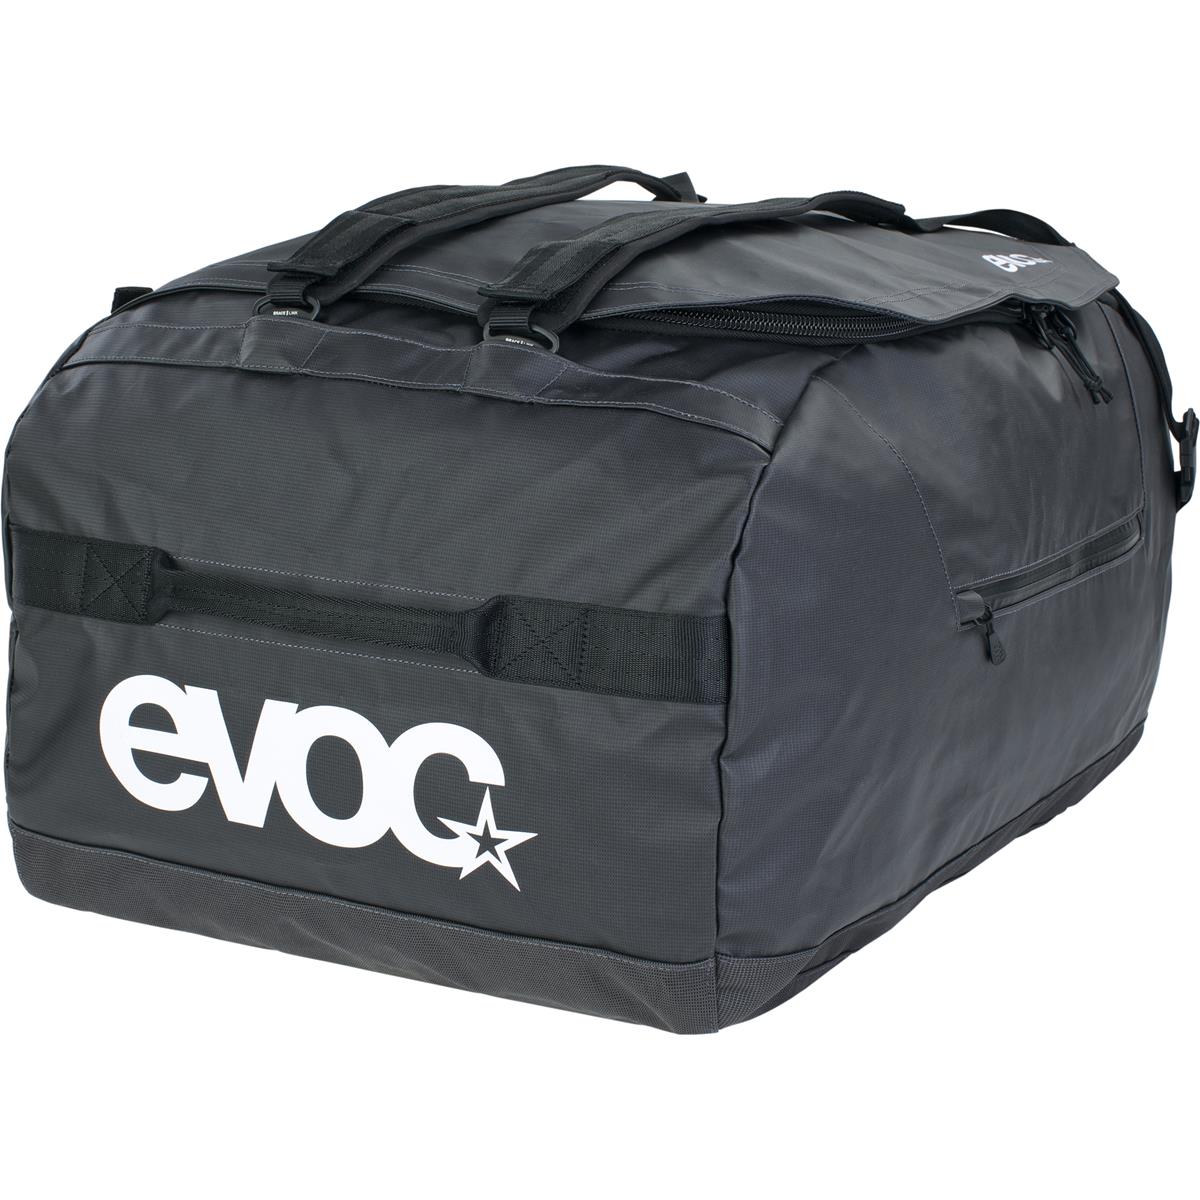 Evoc Borsone Duffel Bag 100 Carbon Grigio/Nero